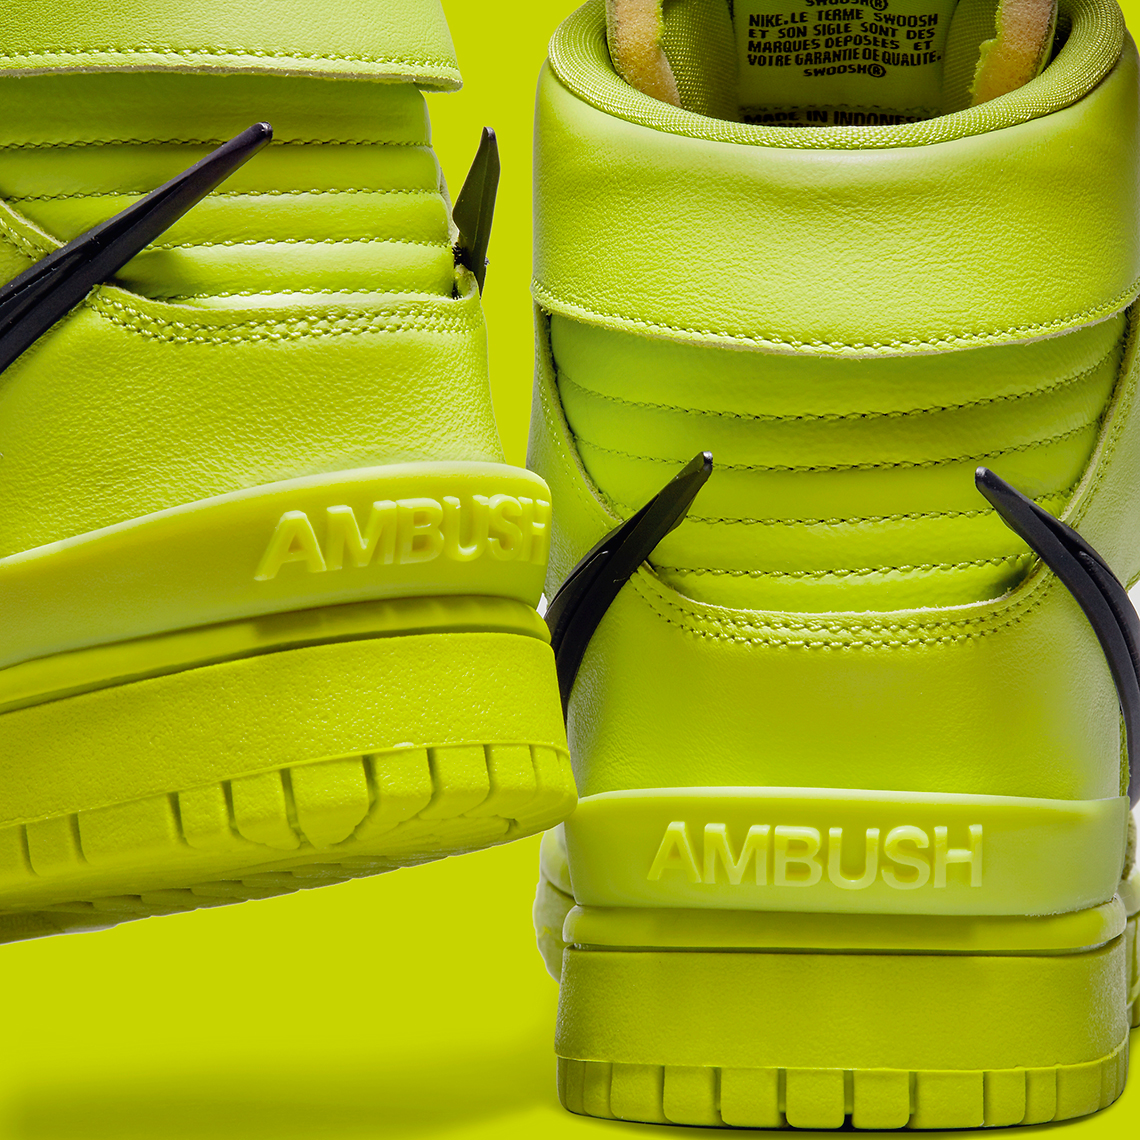 ambush Nike lebron dunk high atomic green CU7544 300 release date 7